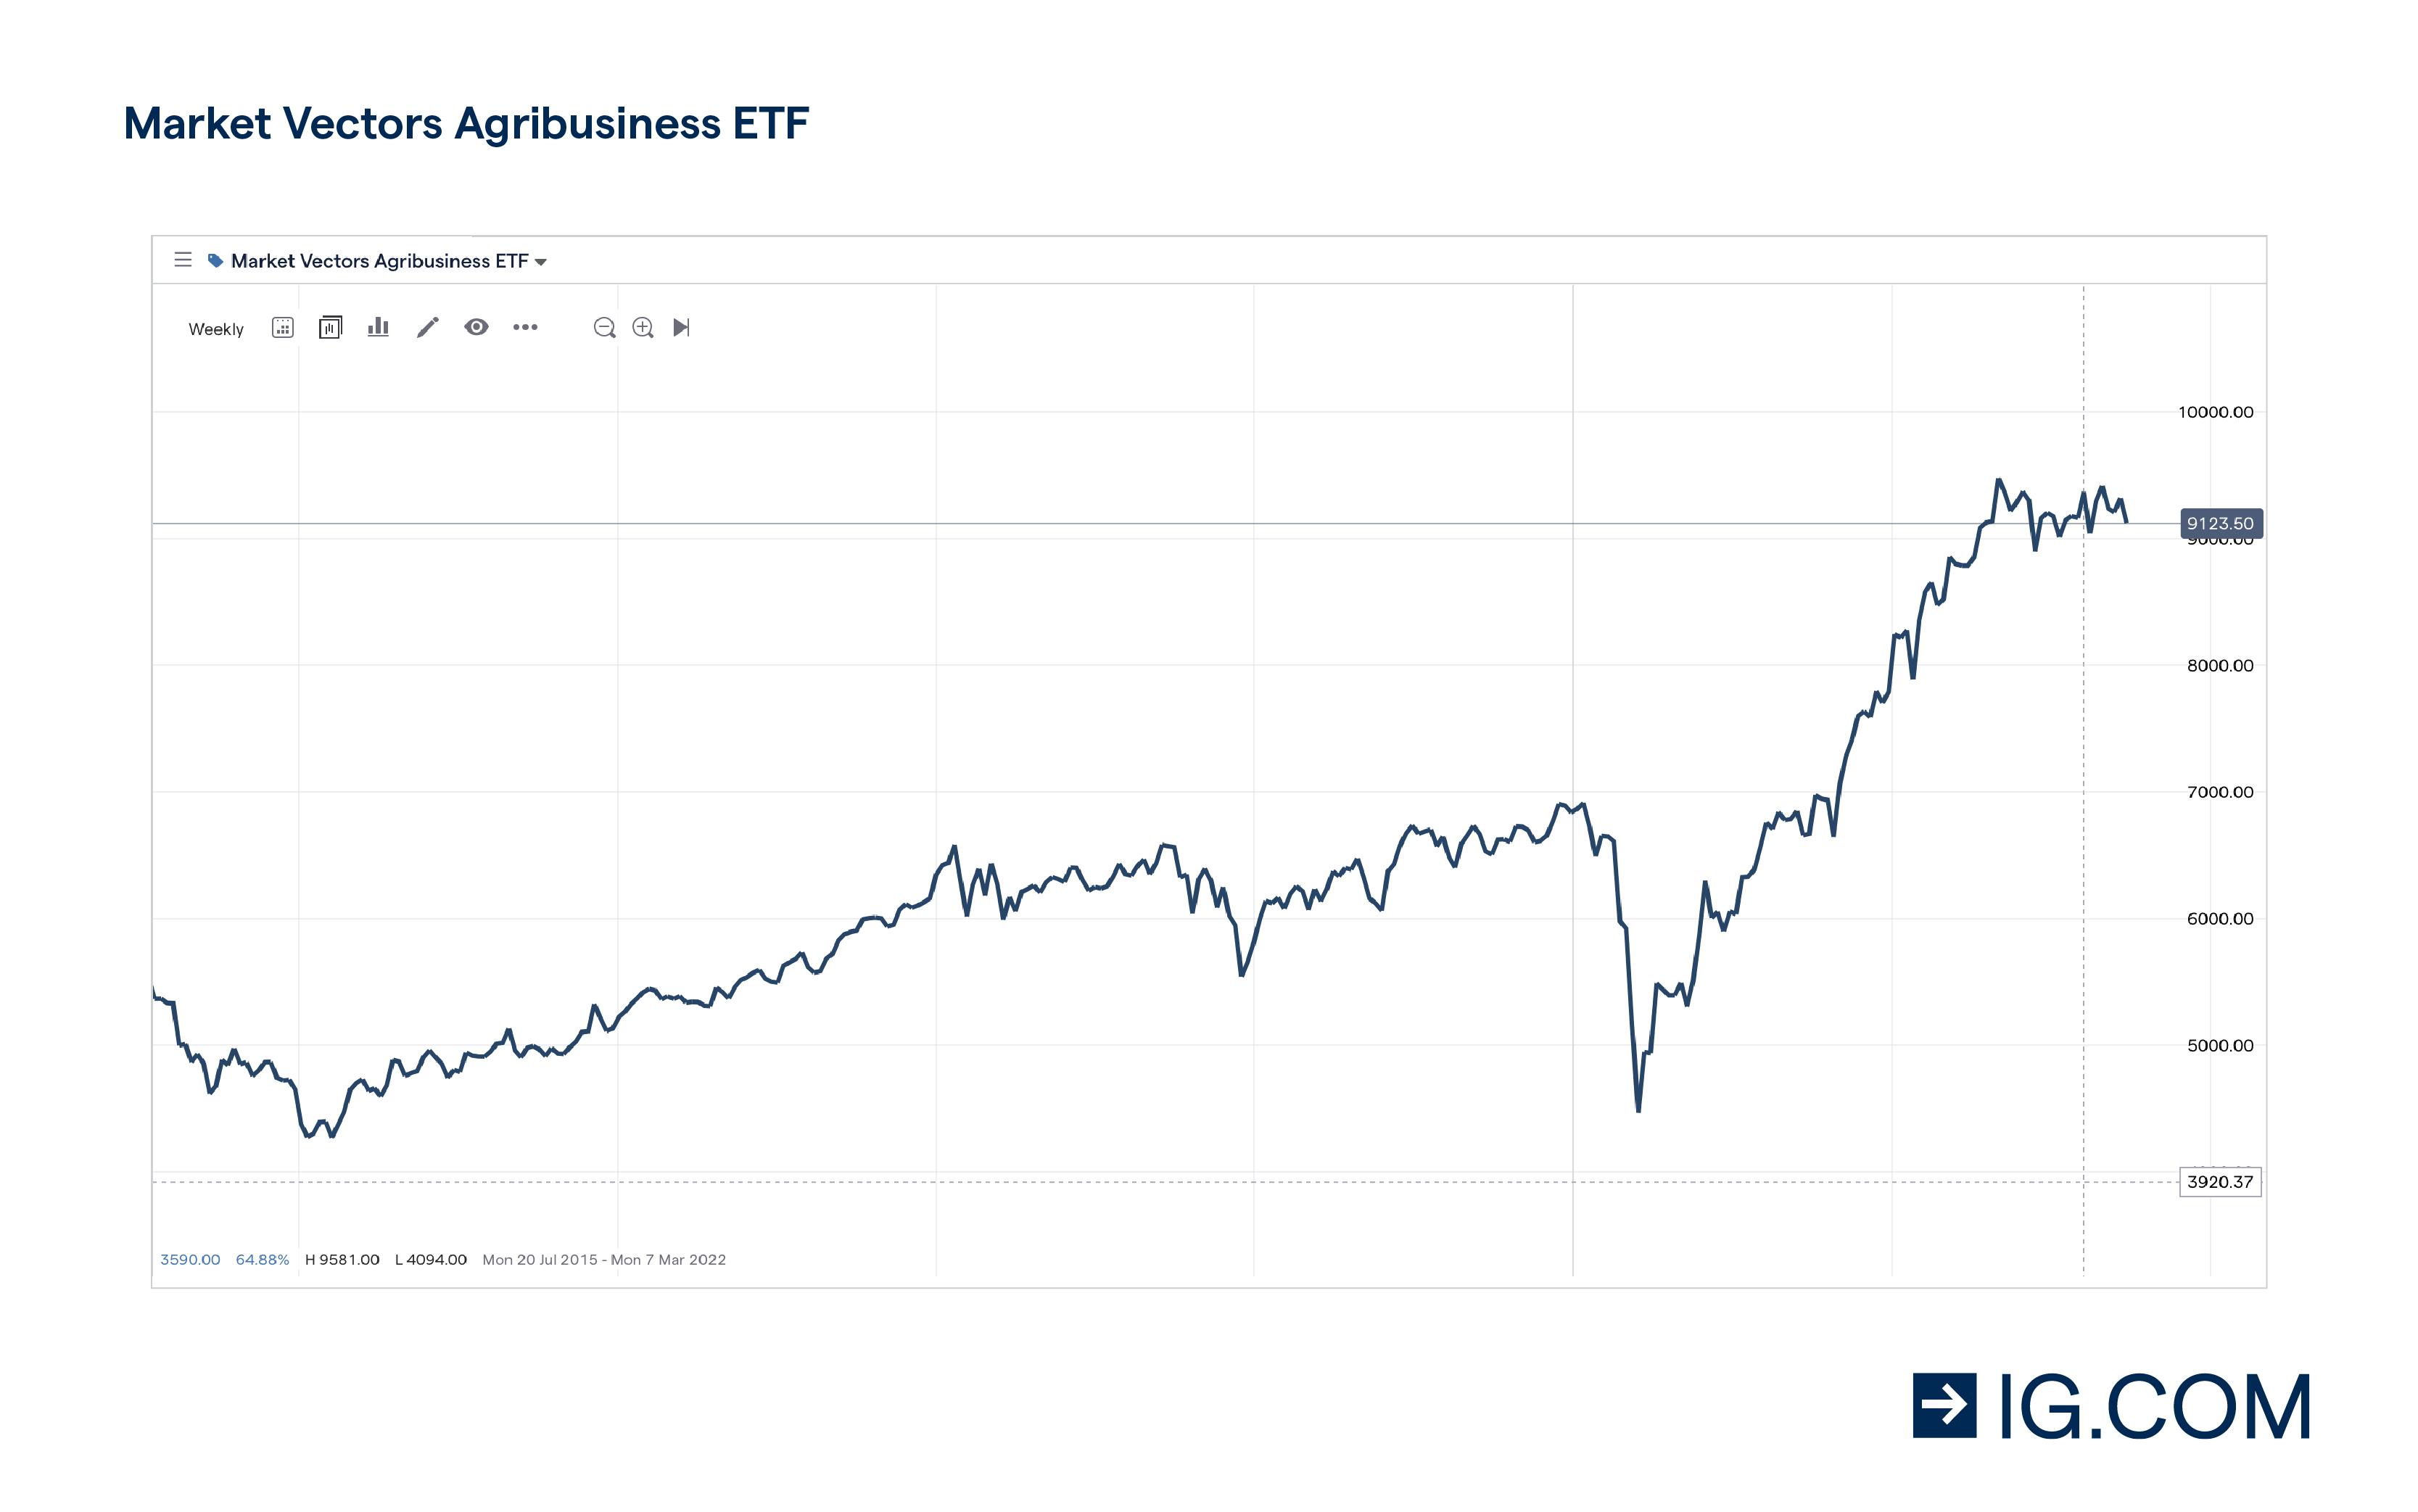 Market Vectors Agribusiness ETF chart